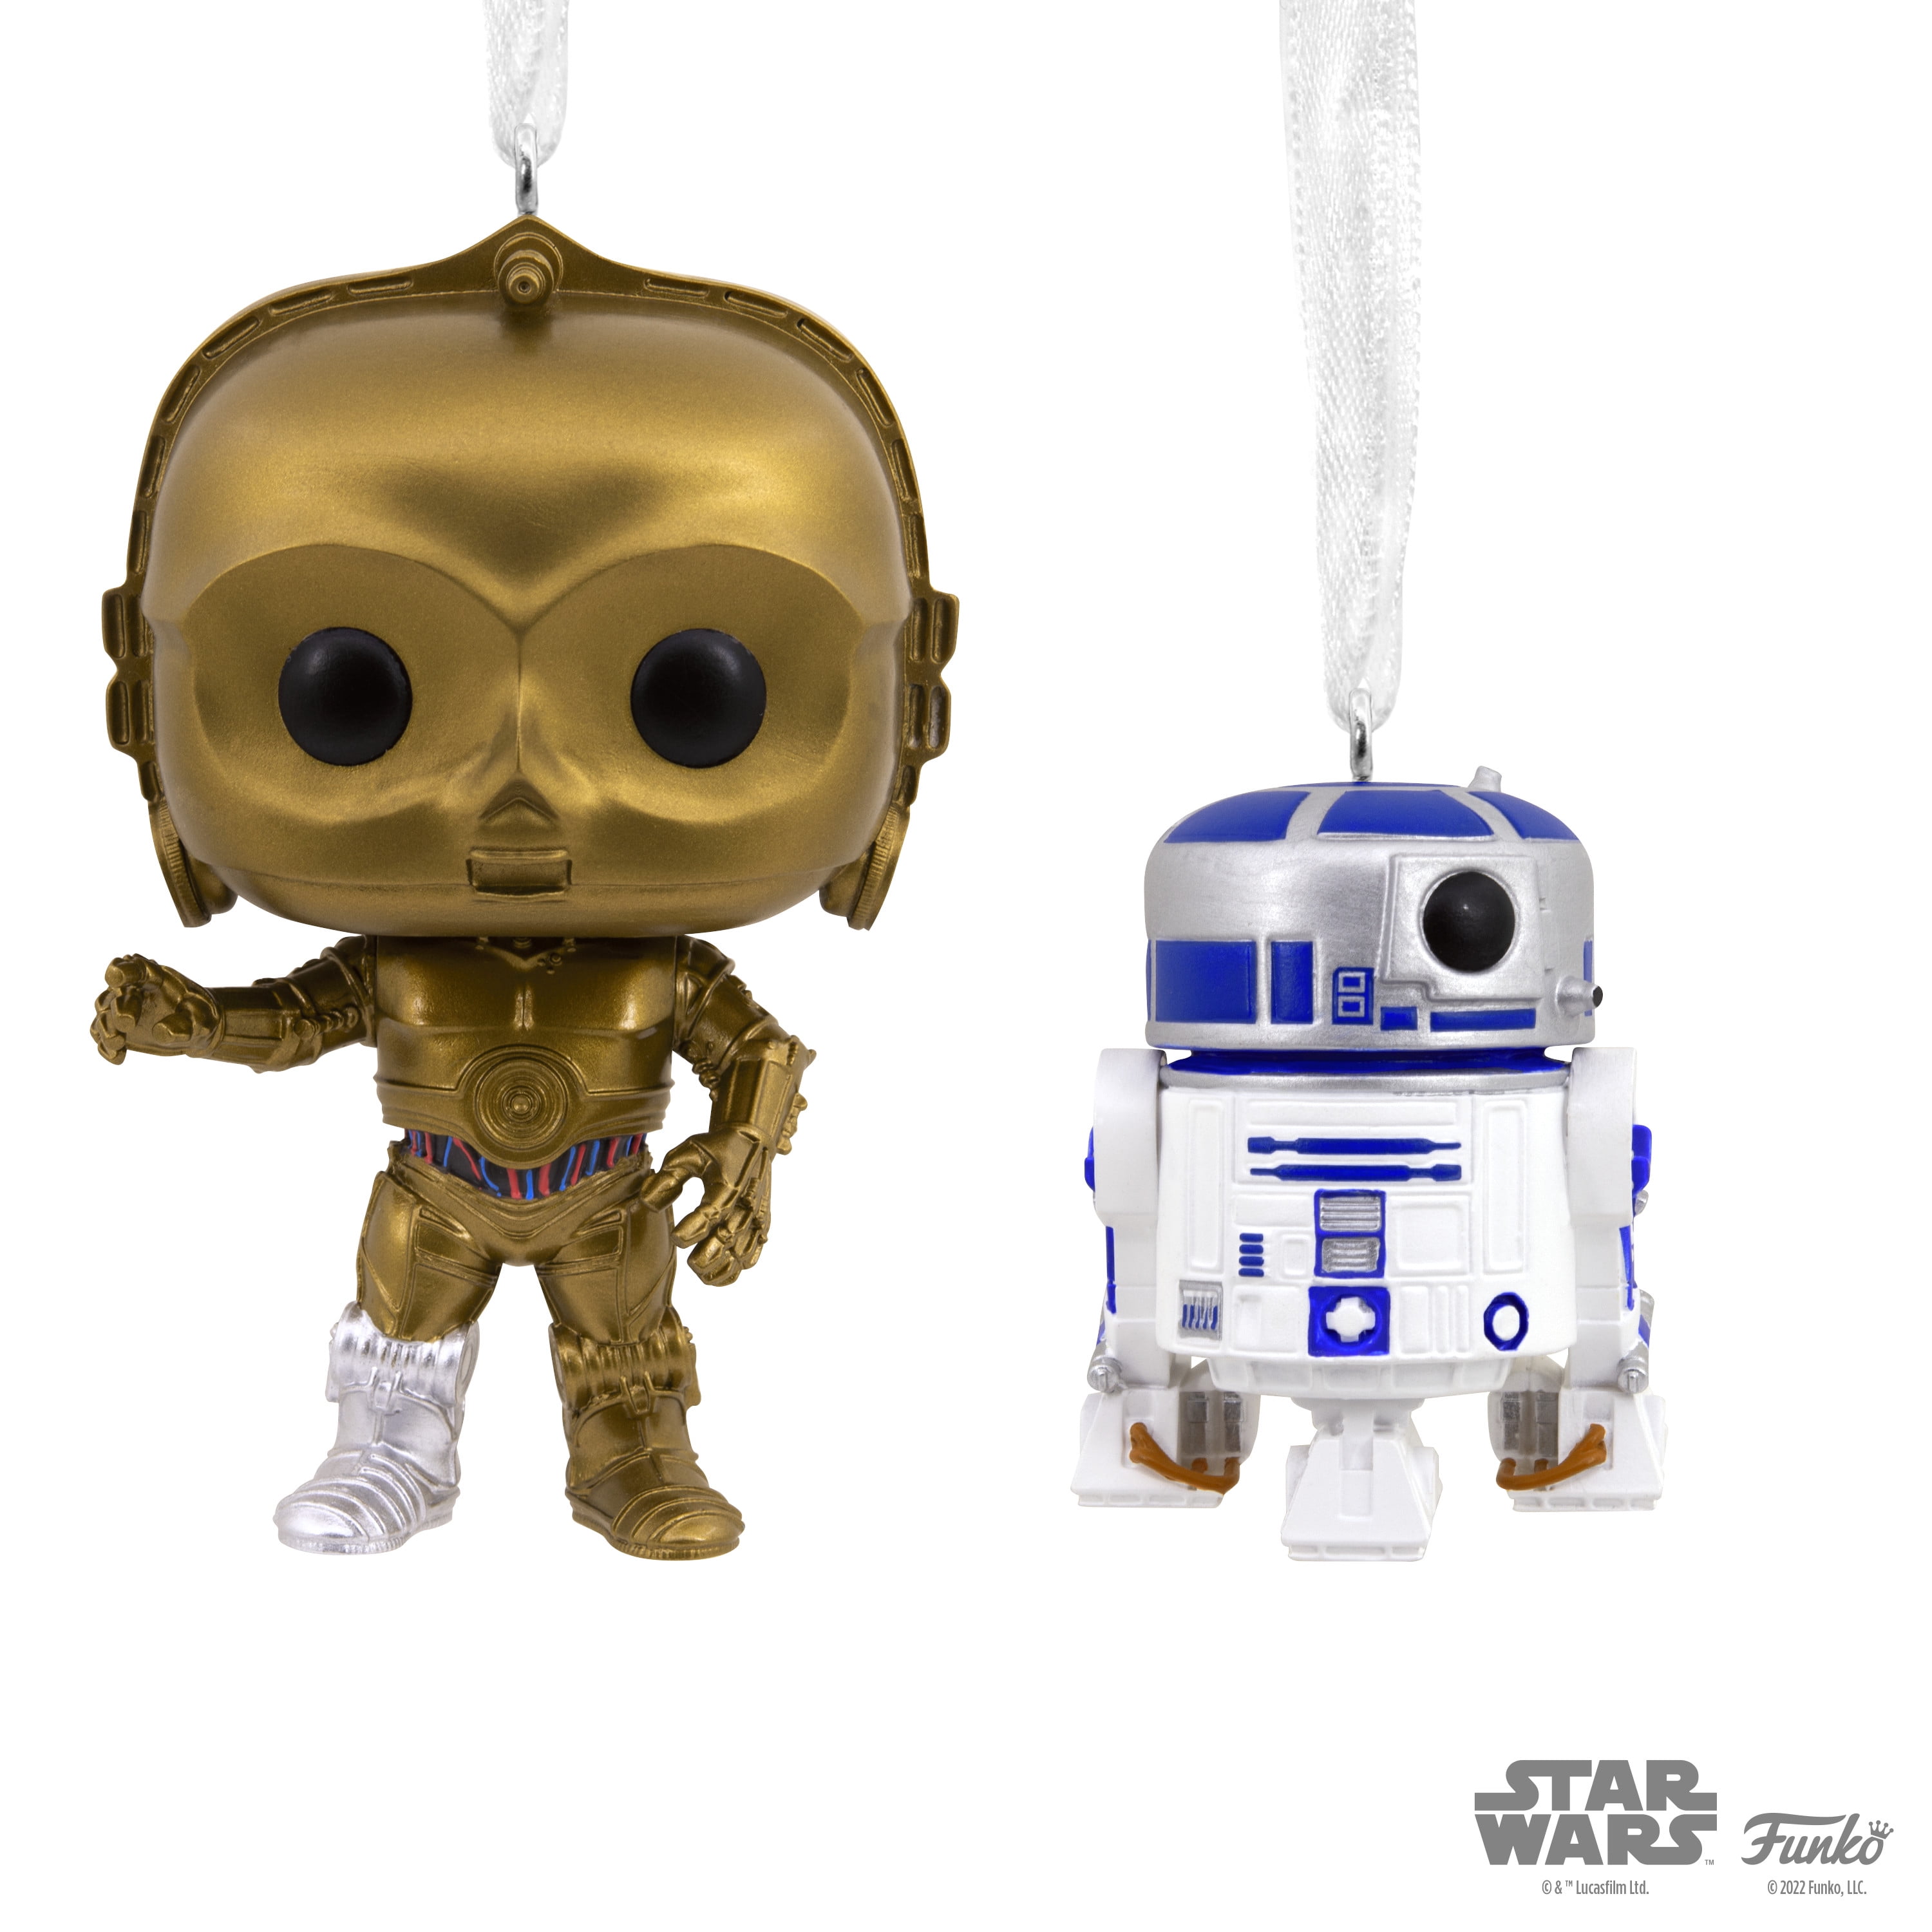 Minder suiker Regelmatigheid Hallmark Star Wars Mystery Ornaments (C-3PO and R2-D2 Funko POP!, Set of 2)  - Limited Availability - Walmart.com